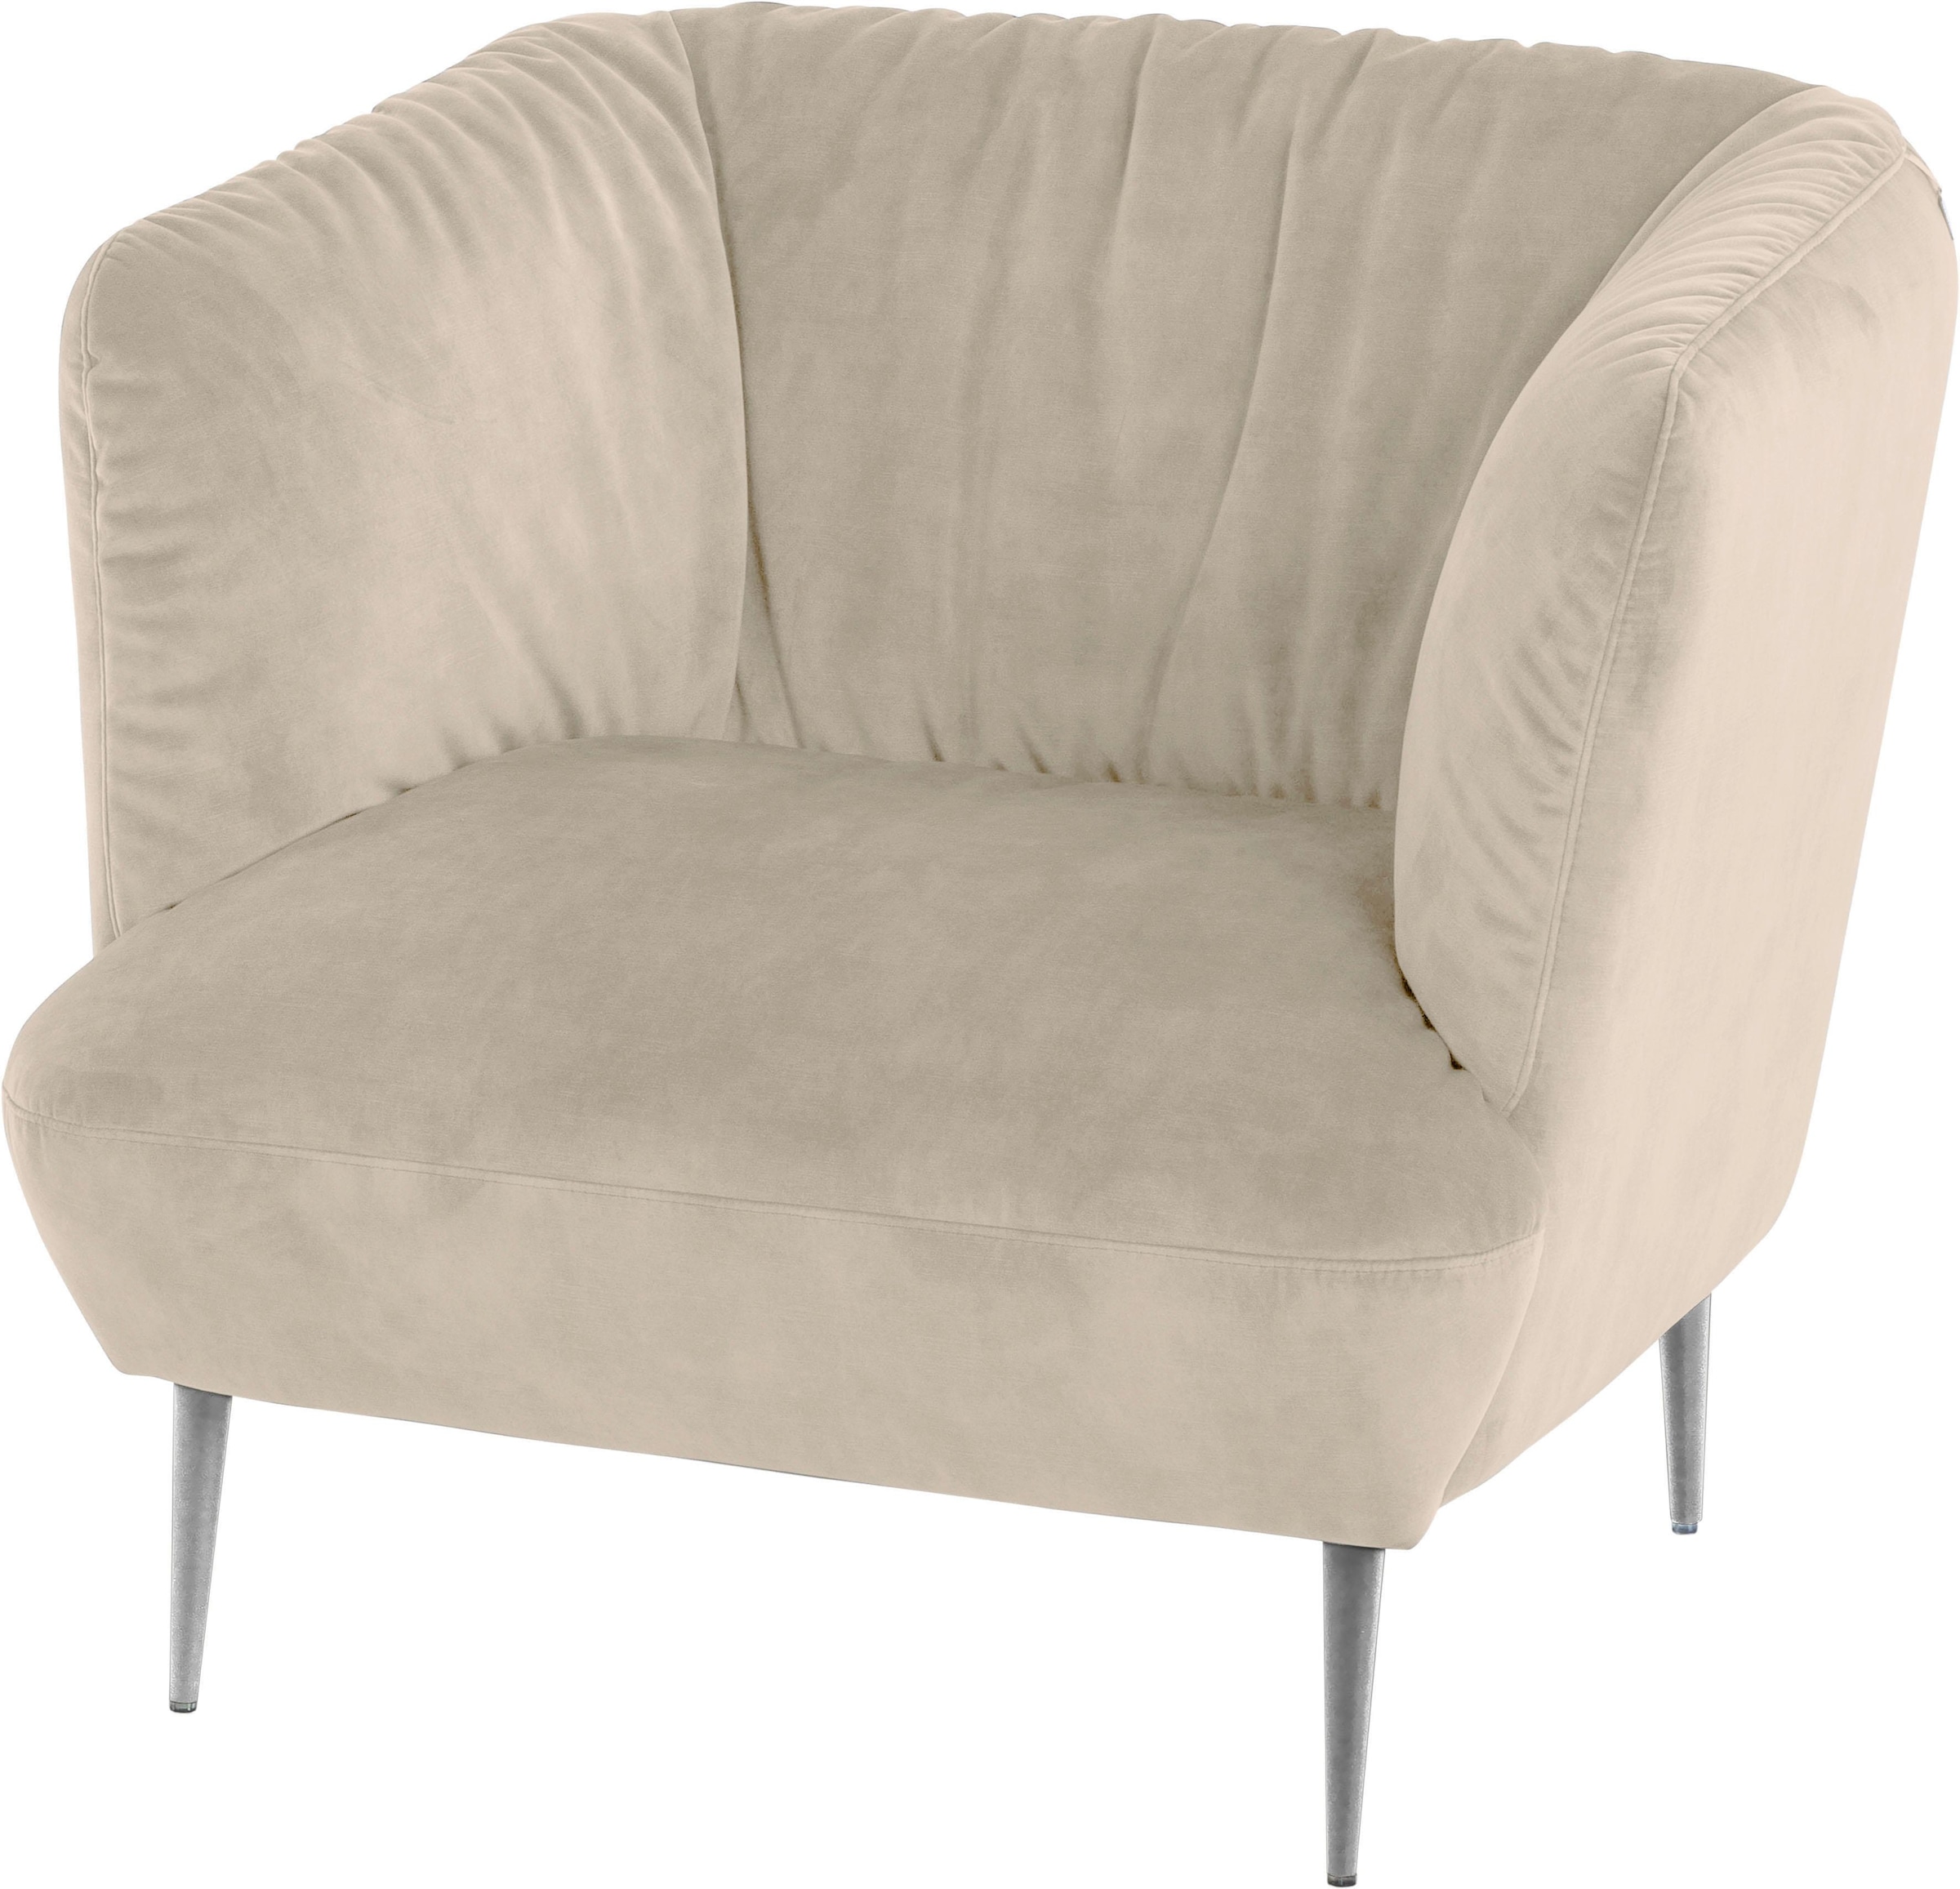 W.SCHILLIG Sessel & Füße glänzend | BAUR Boch »Villeroy ELLA«, Chrom